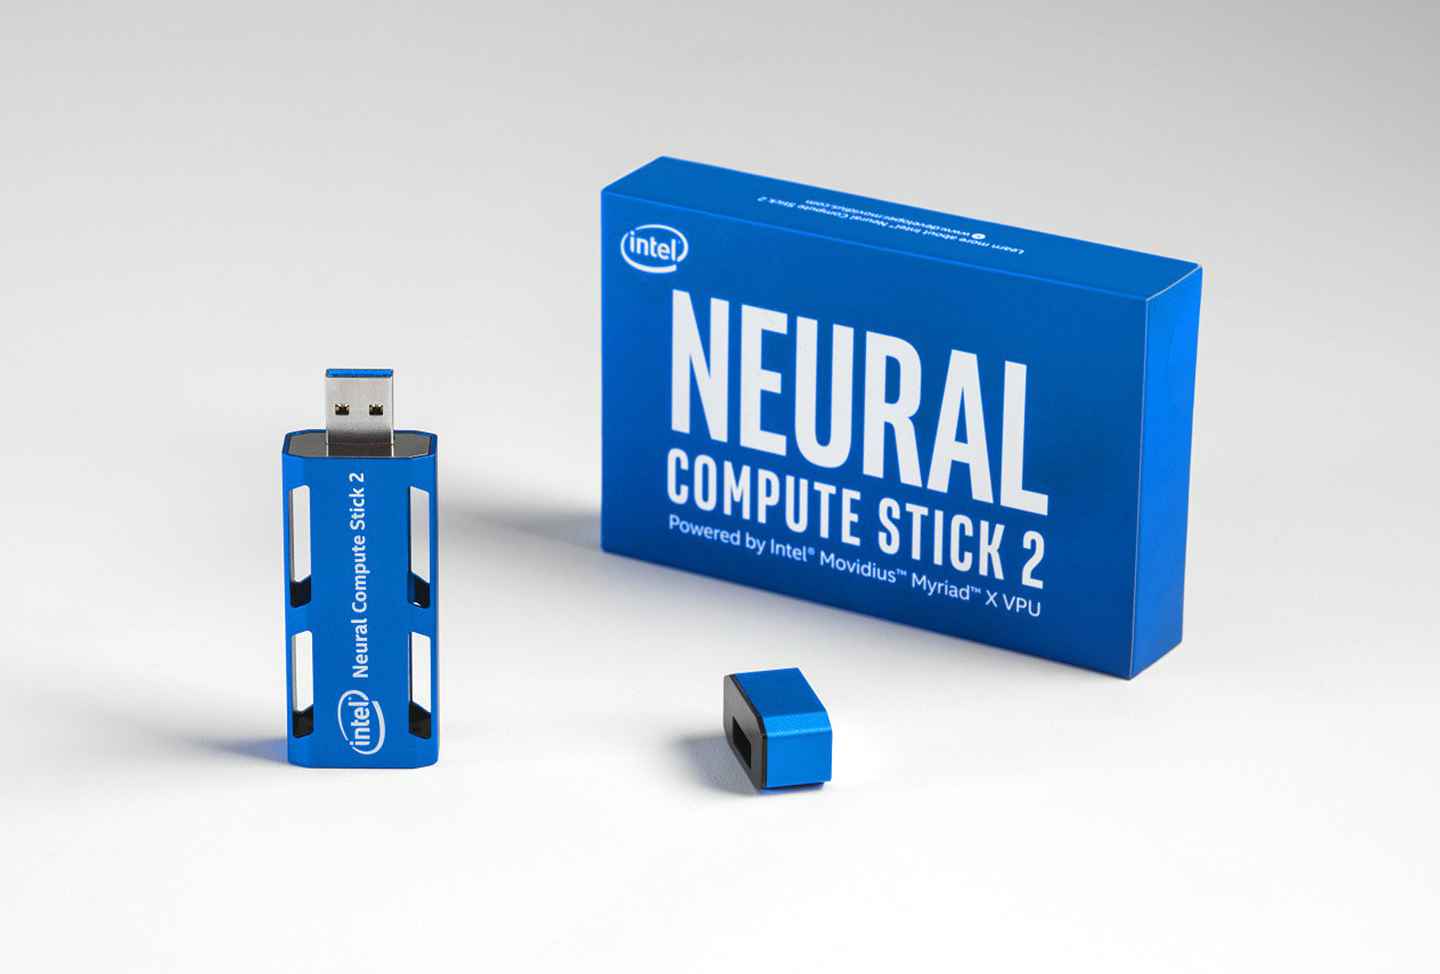 Intel Neural Compute Stick 2 For AI